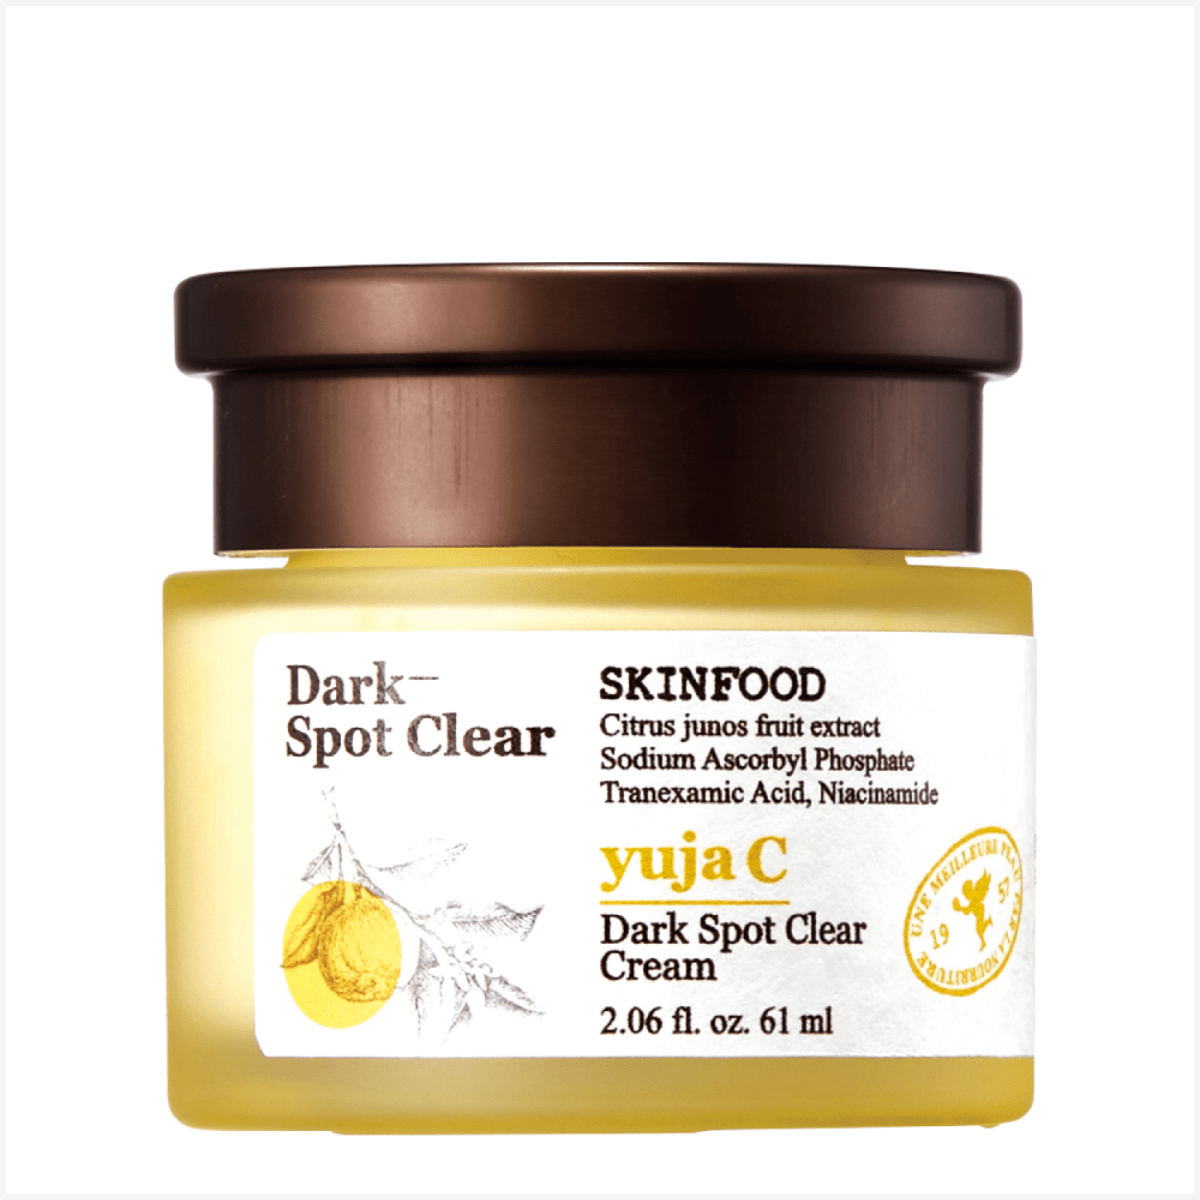 Crema Facial Skinfood Yuja C Dark Spot Clear 61ml - Crema